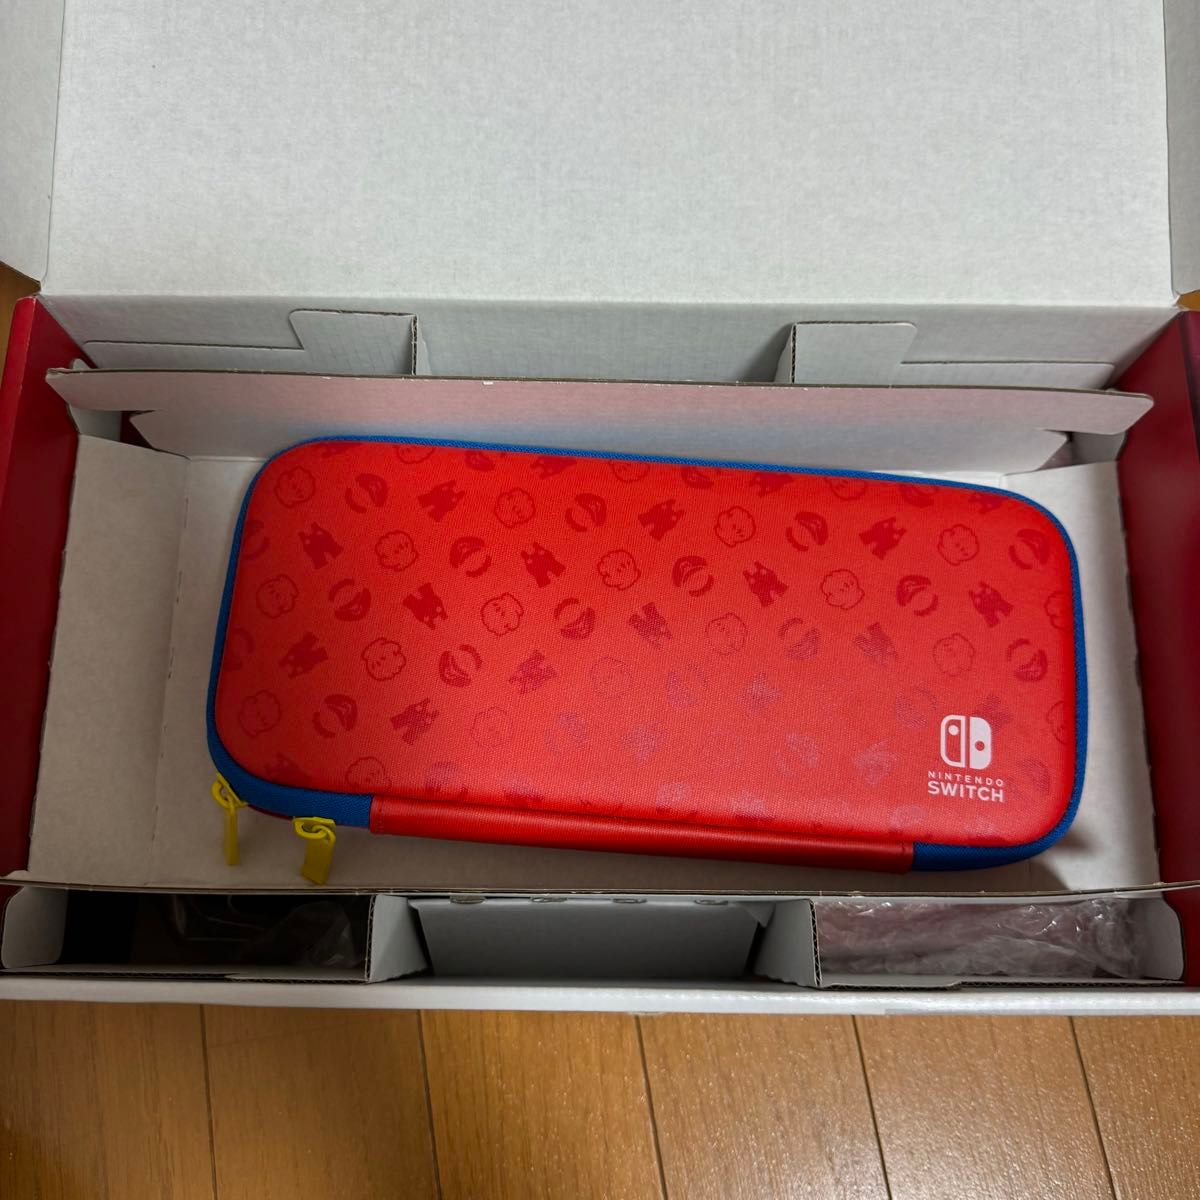 Nintendo Switch 新型 マリオレッド×ブルー セット